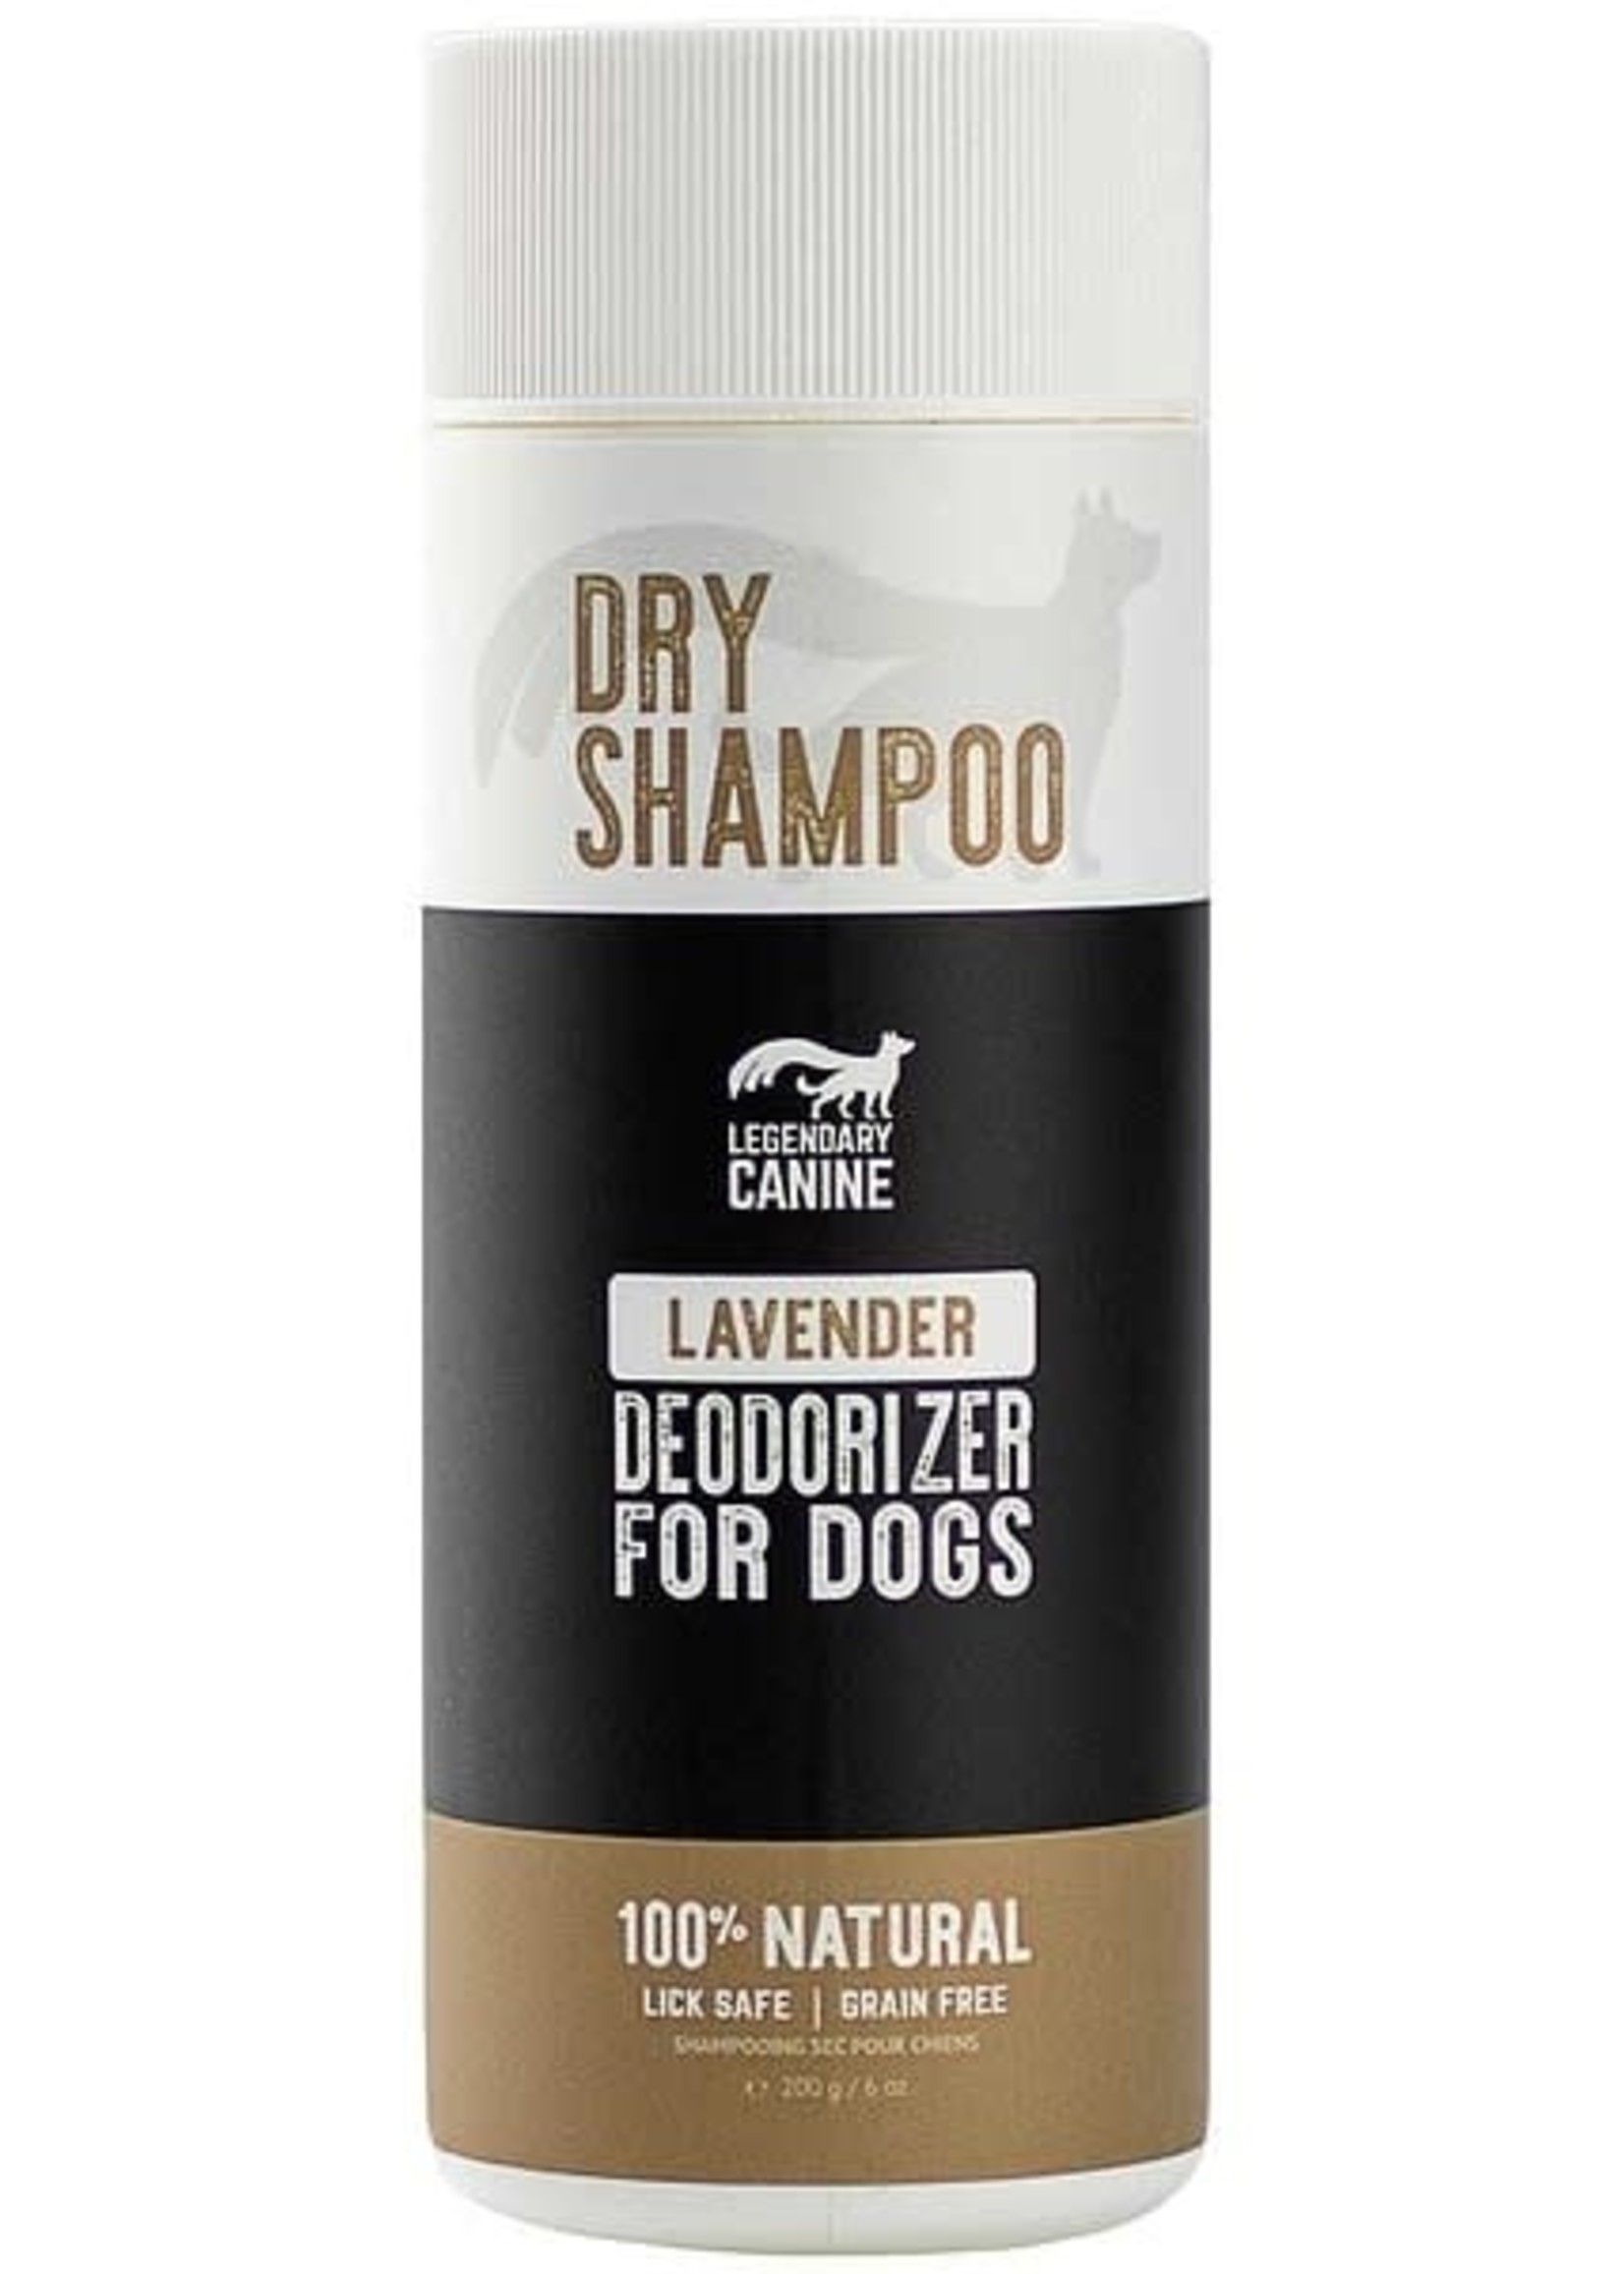 Legendary Canine Legendary Canine Lavender Deodorizer Dry Shampoo for Dogs